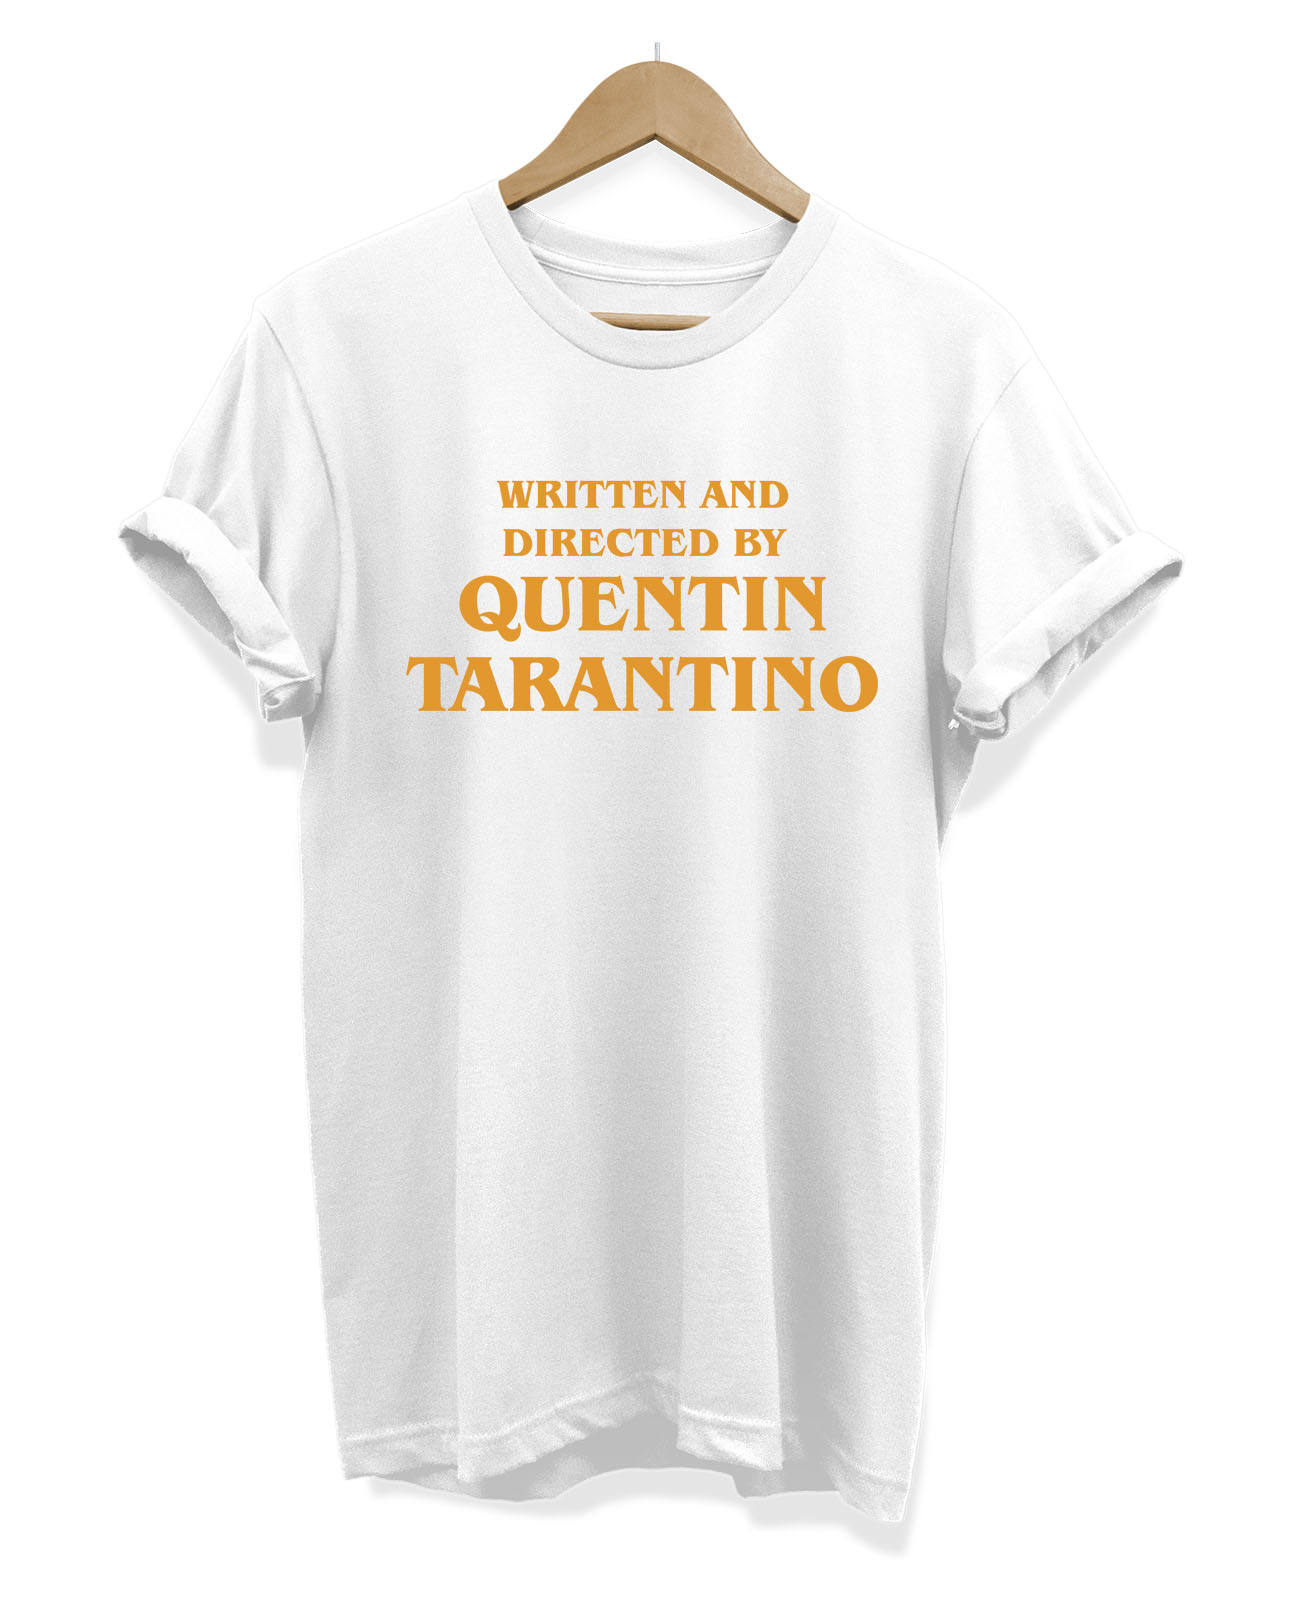 Quentin Tarantino Movies Shirt Quentin Tarantino Shirt Written and Directed by Quentin Tarantino T- Shirt, Retro Vintage shirt